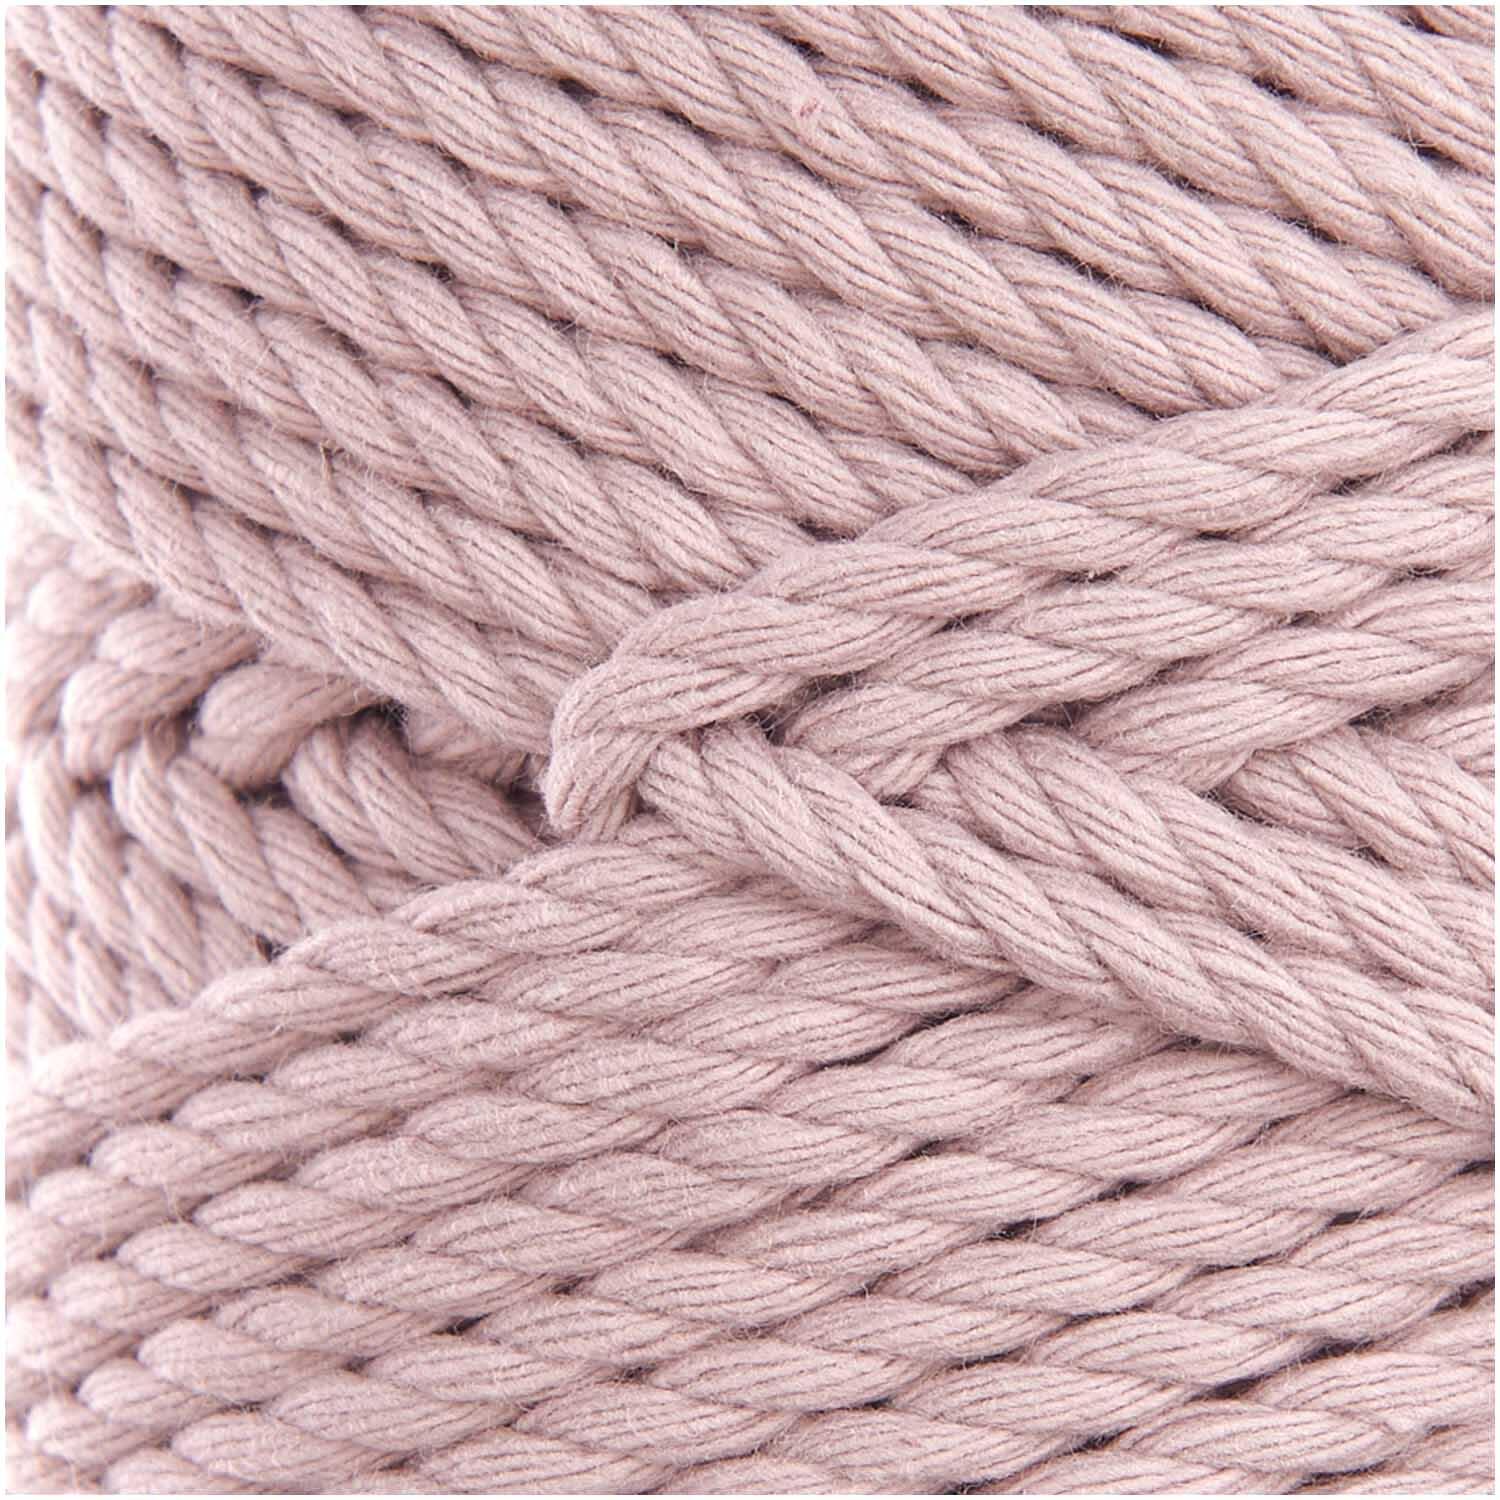 Creative Cotton Cord Skinny - 190g Makrameegarn aus Baumwolle Farbe 013 Altrosa